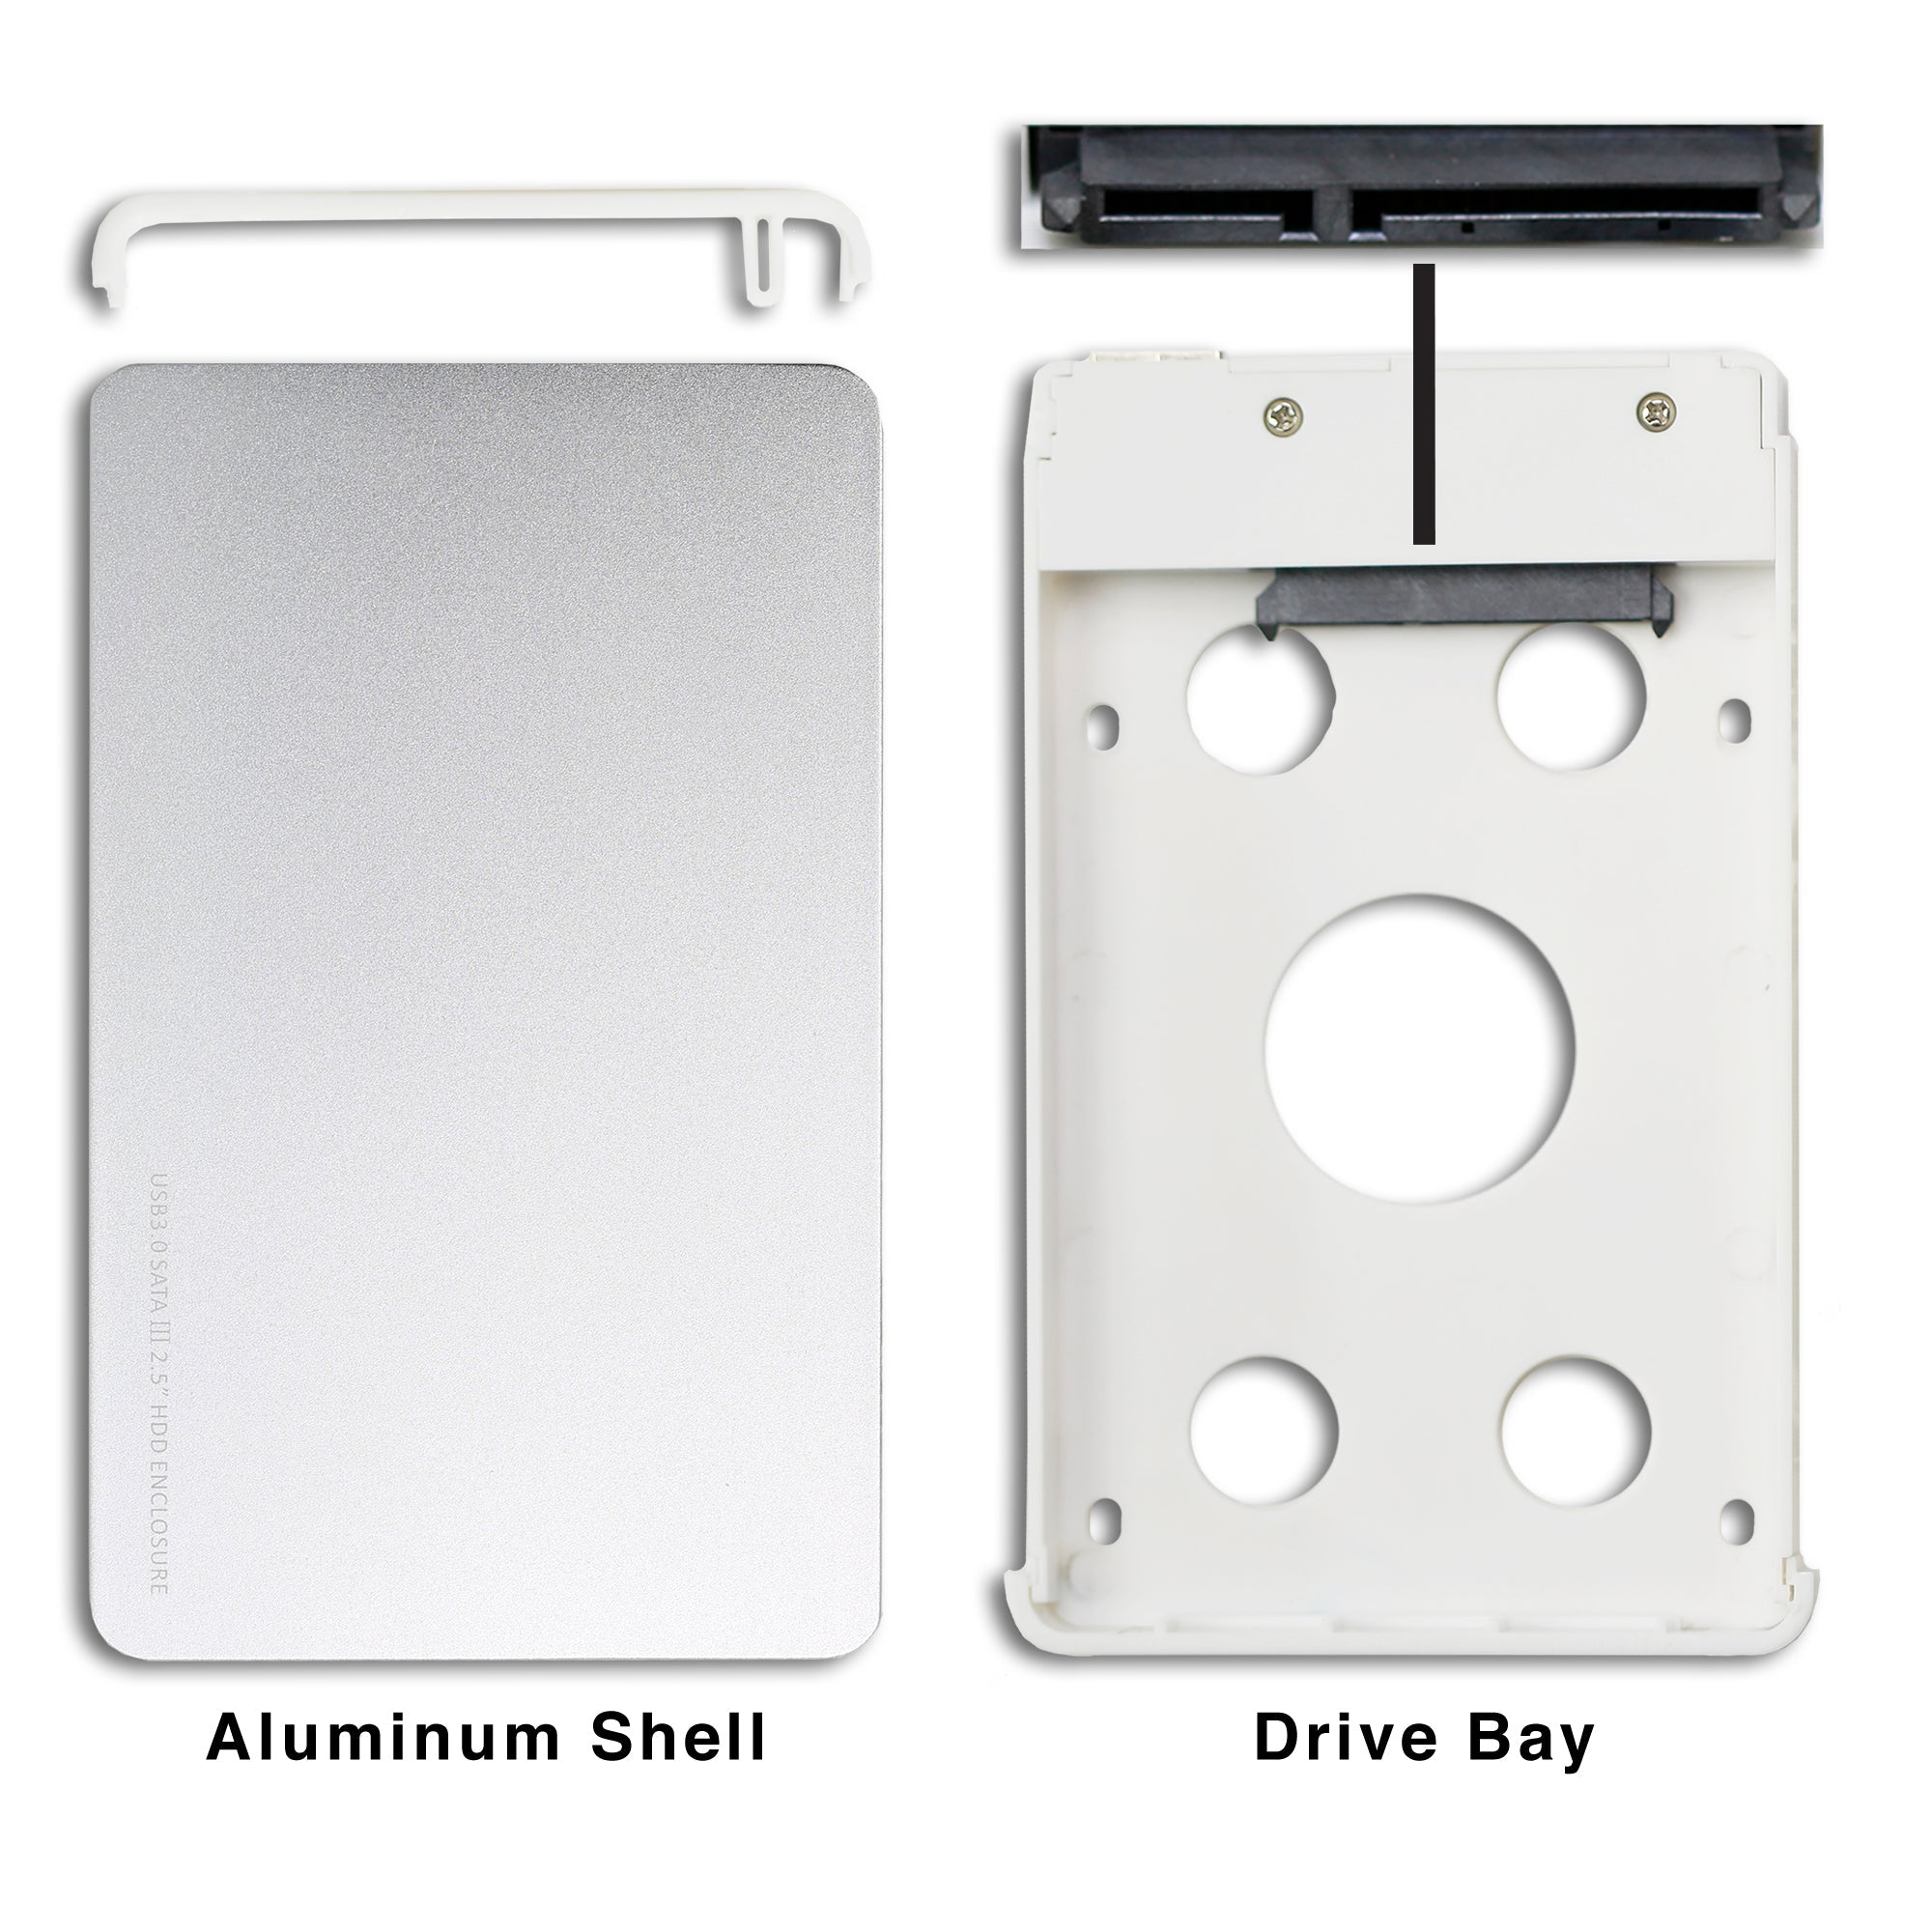 USB 3.0 2.5 Inch SATA Hard Drive Enclosure - Silver